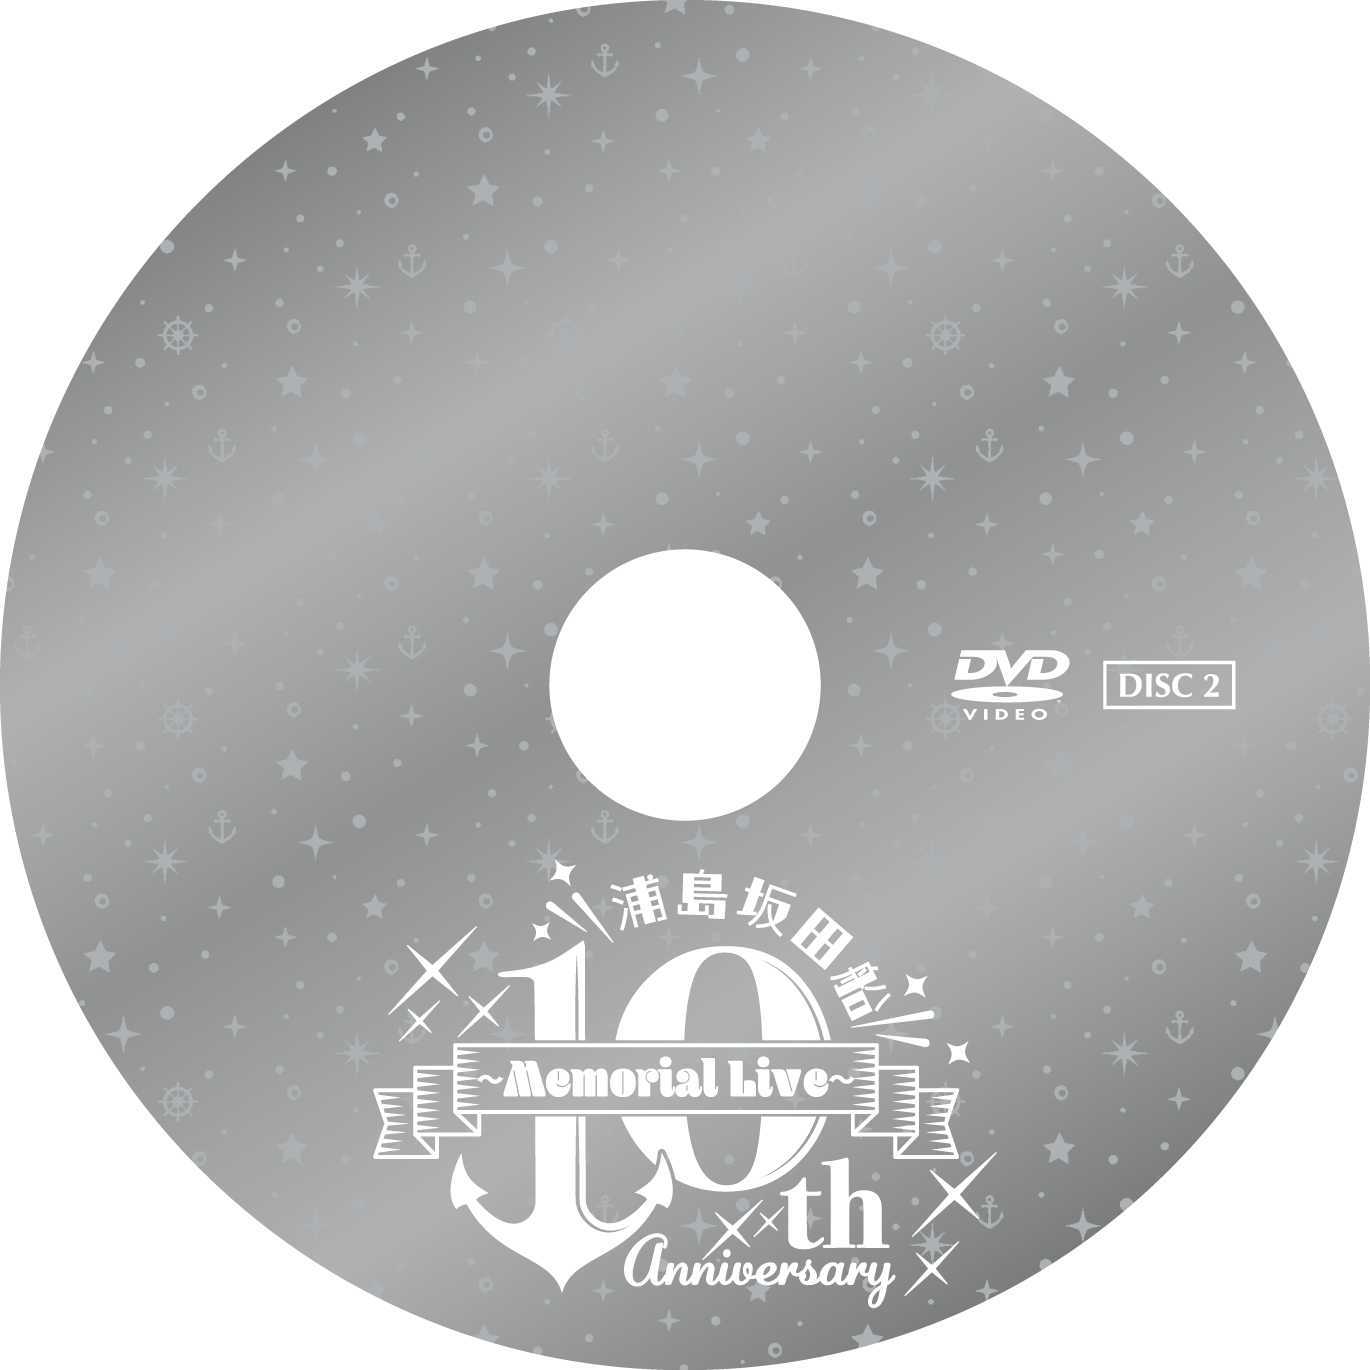 DVD 浦島坂田船 10th Anniversary Memorial Live